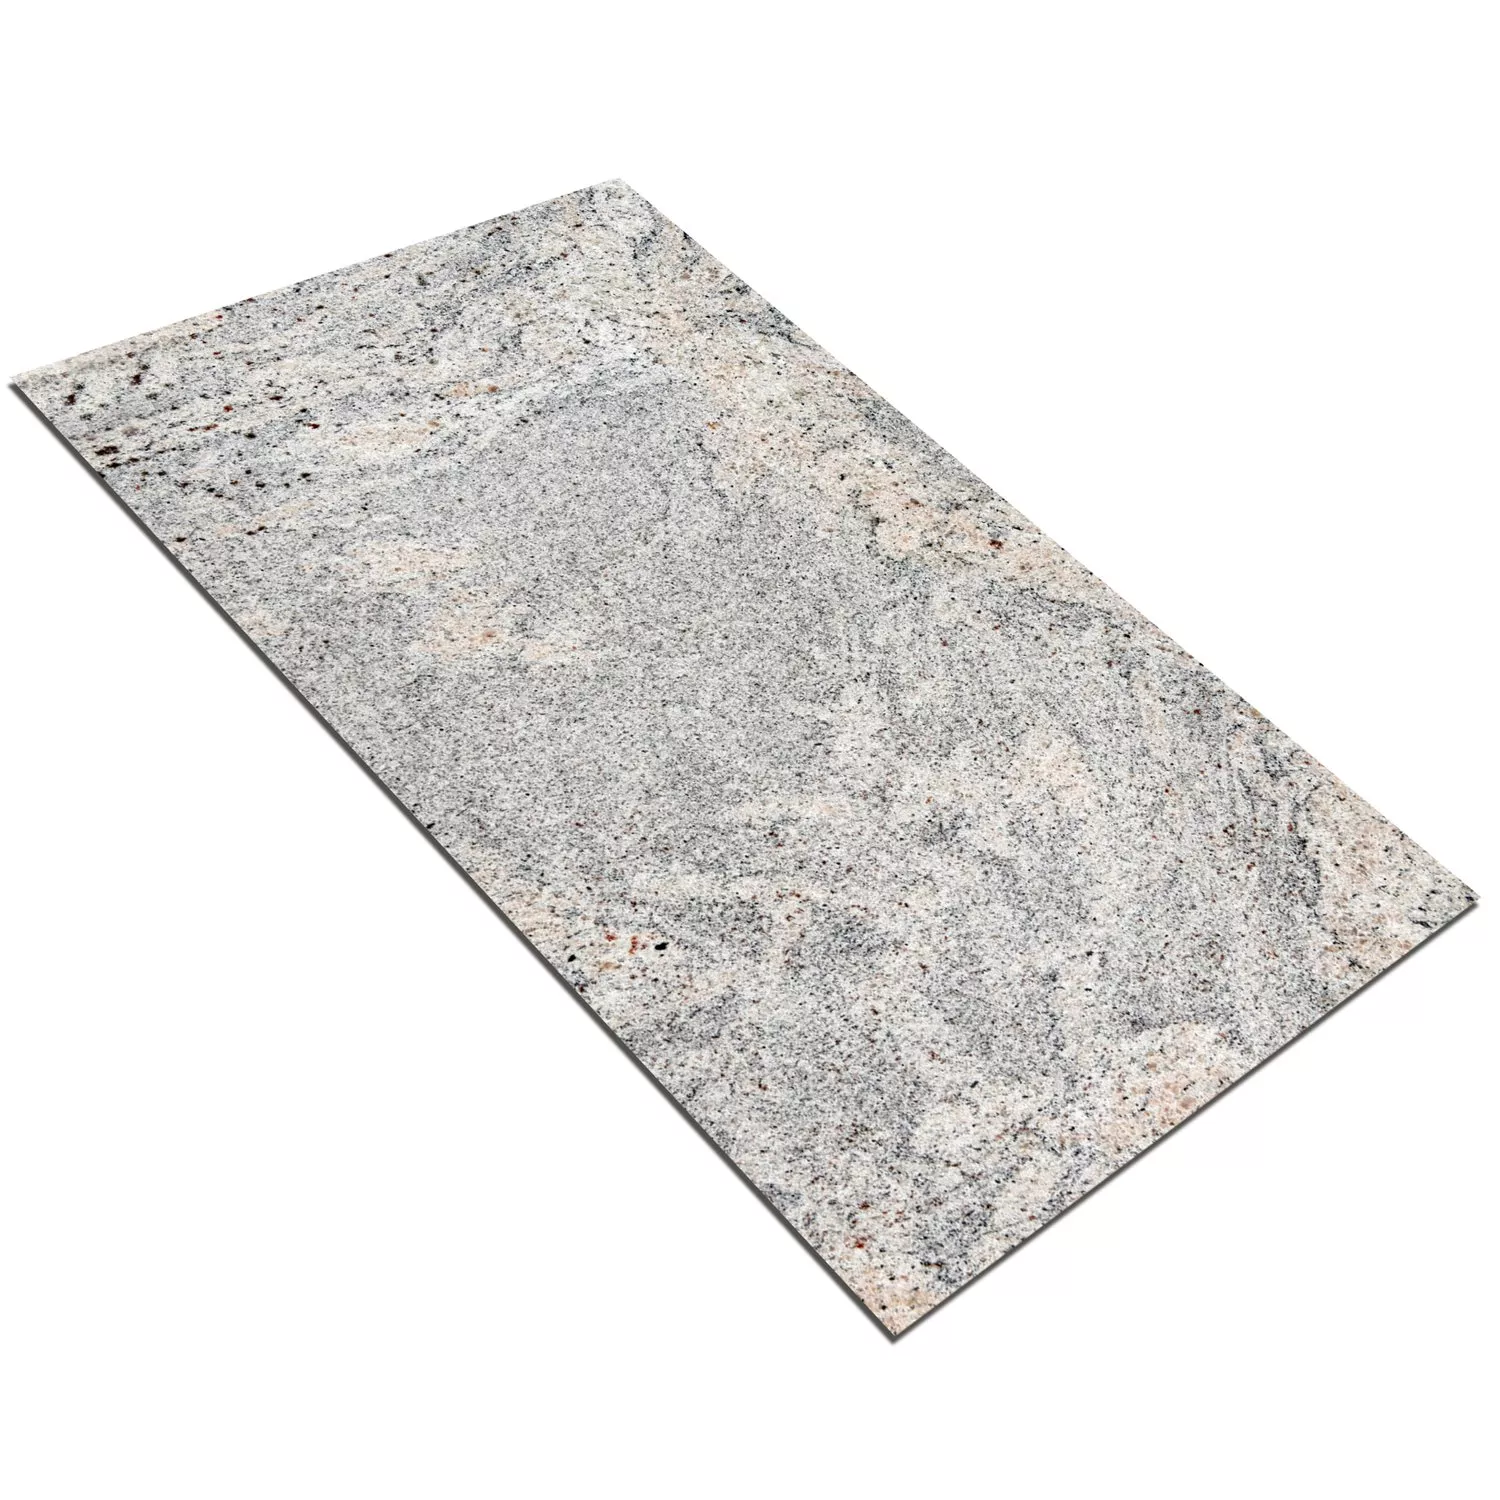 Sample Natural Stone Tiles Granite Juparana Polished 30,5x61cm